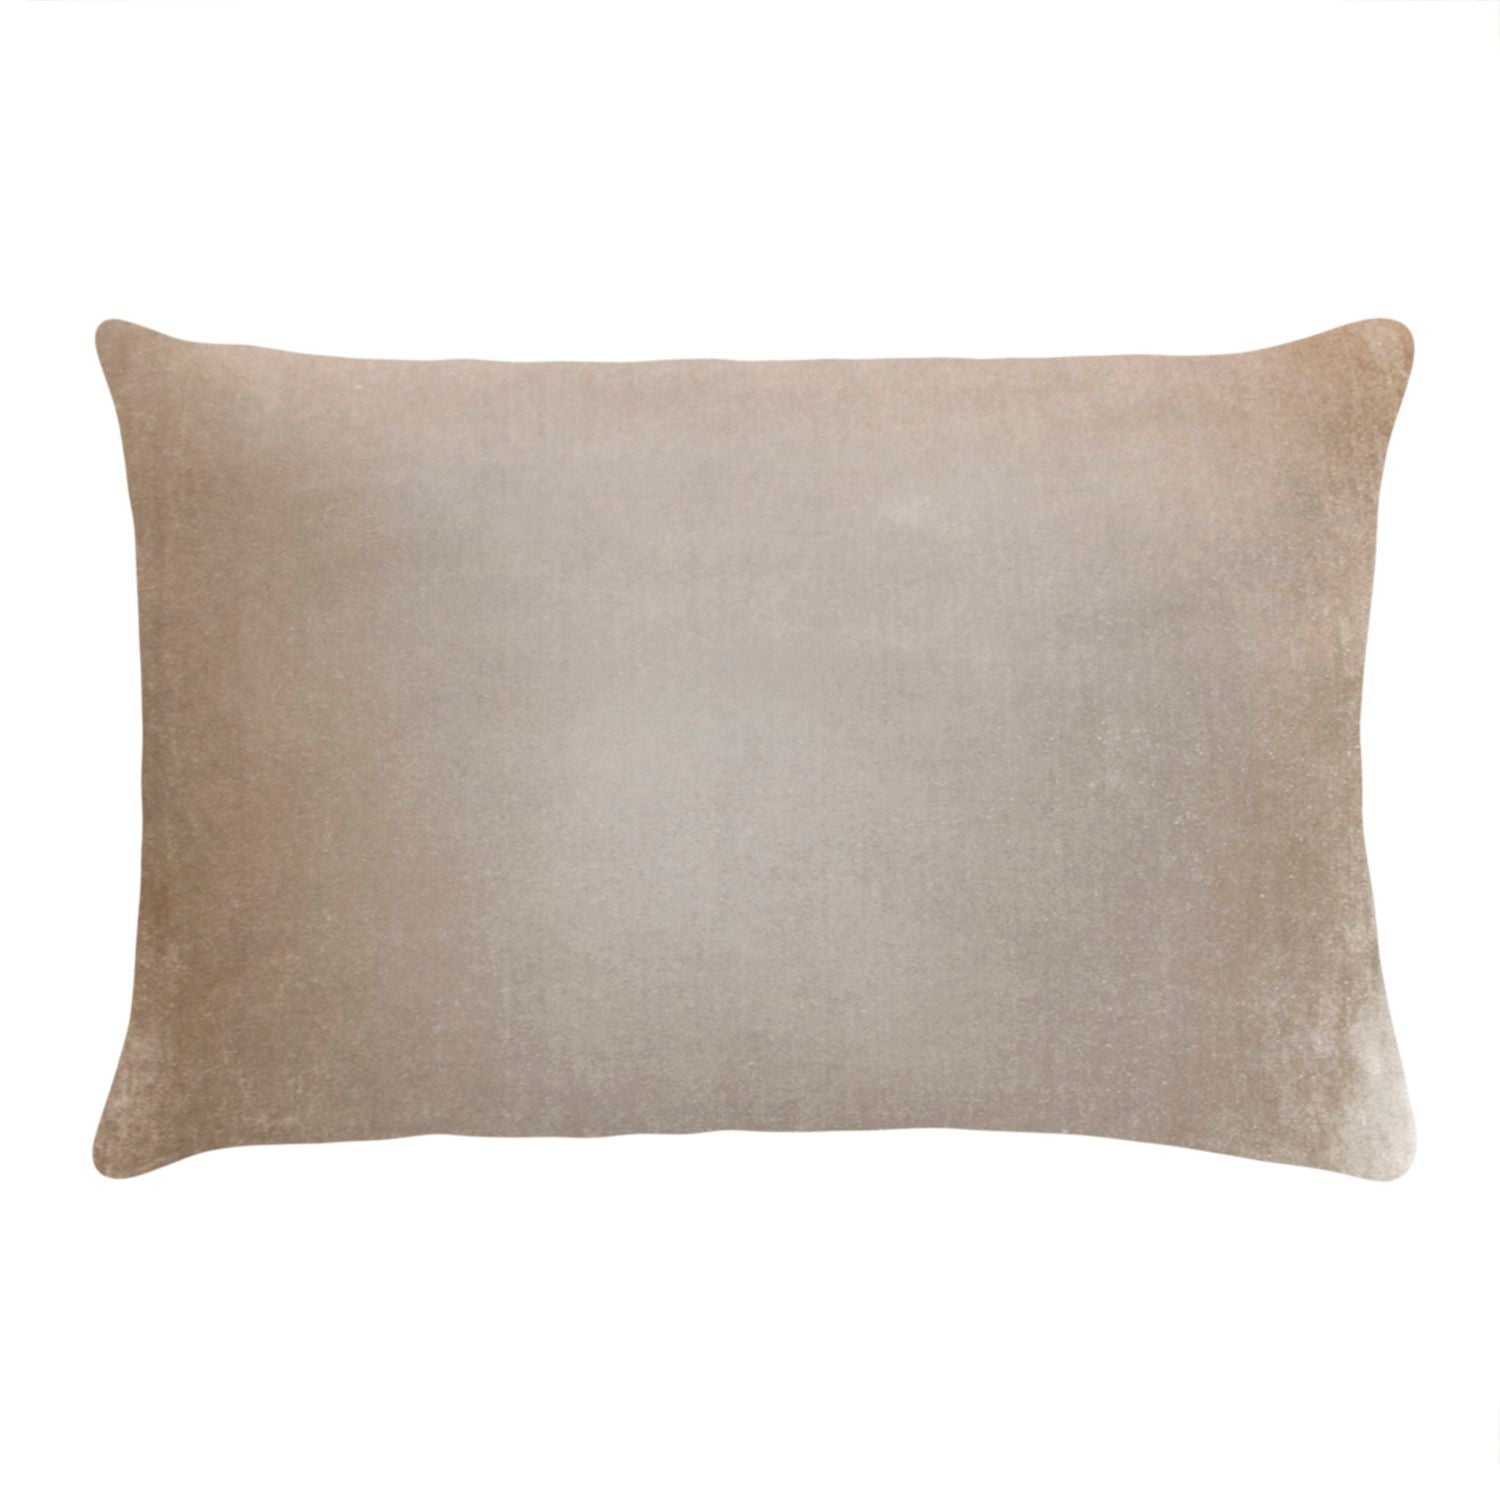 Fig Linens - Ombre Coyote Velvet Pillows by Kevin O’Brien Studio - Boudoir Pillow